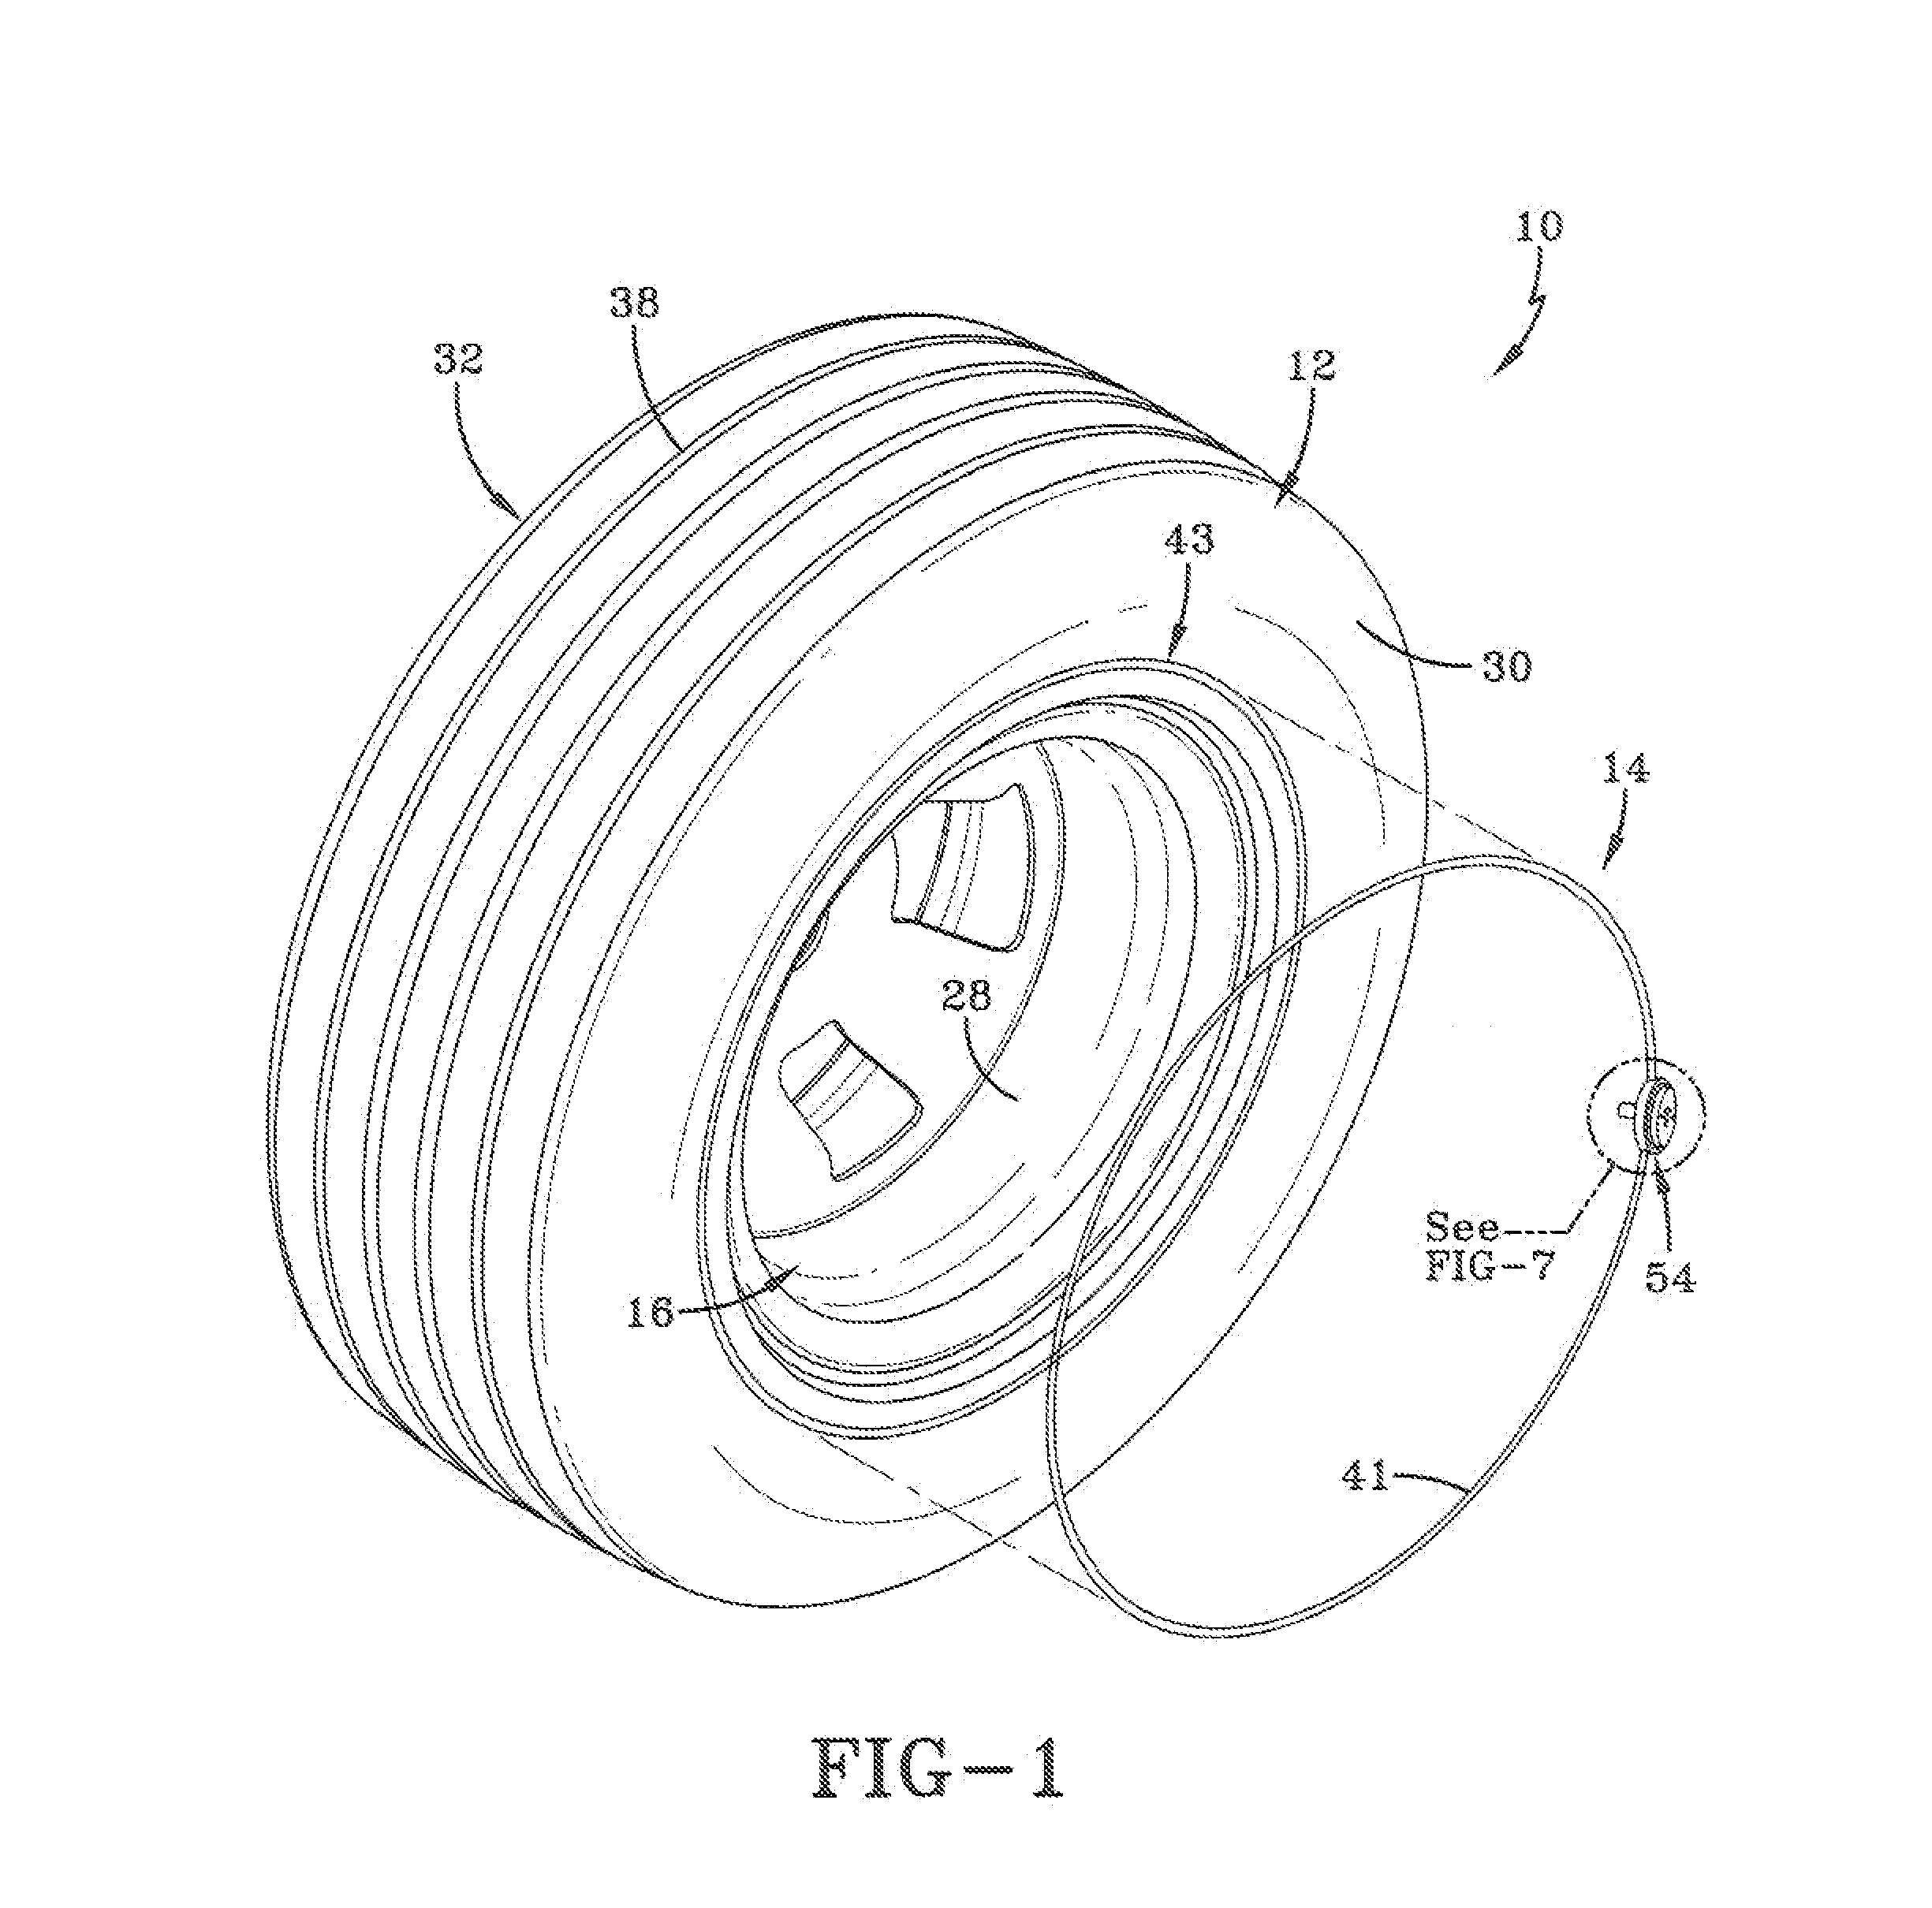 Self-inflating tire and pressure regulator